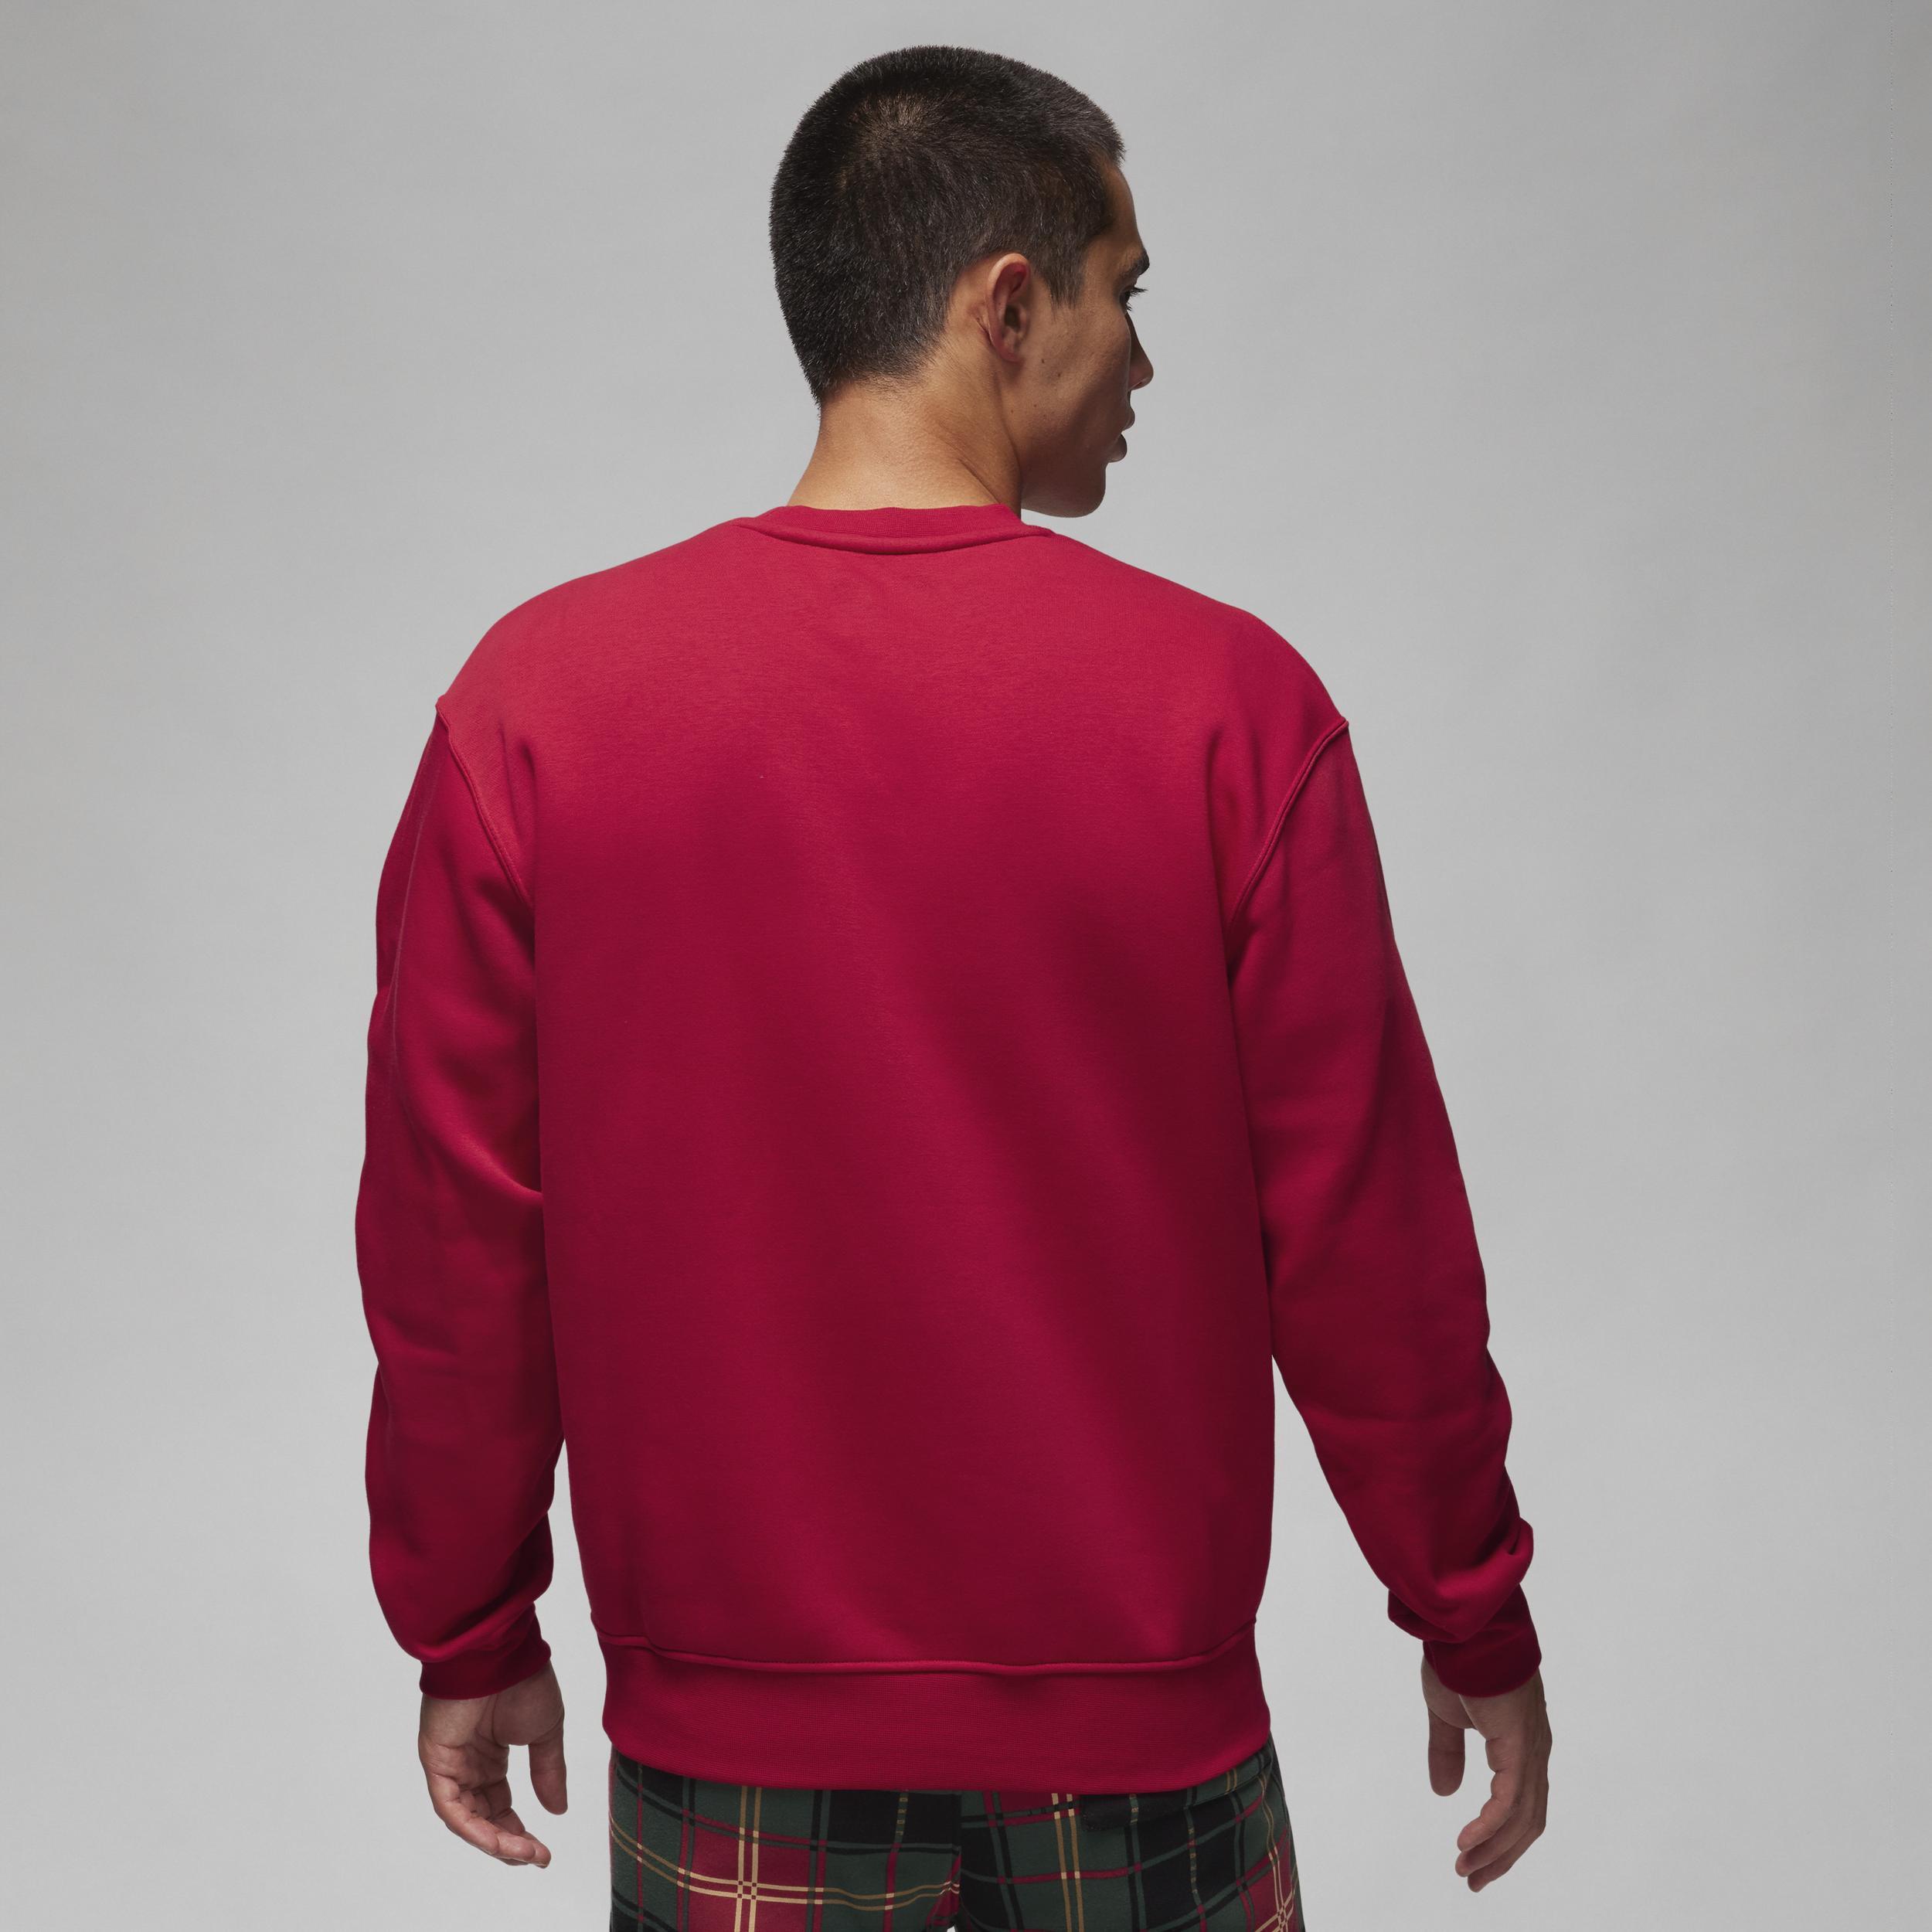 Jordan Mens Essential Holiday Fleece Crewneck Sweatshirt Product Image